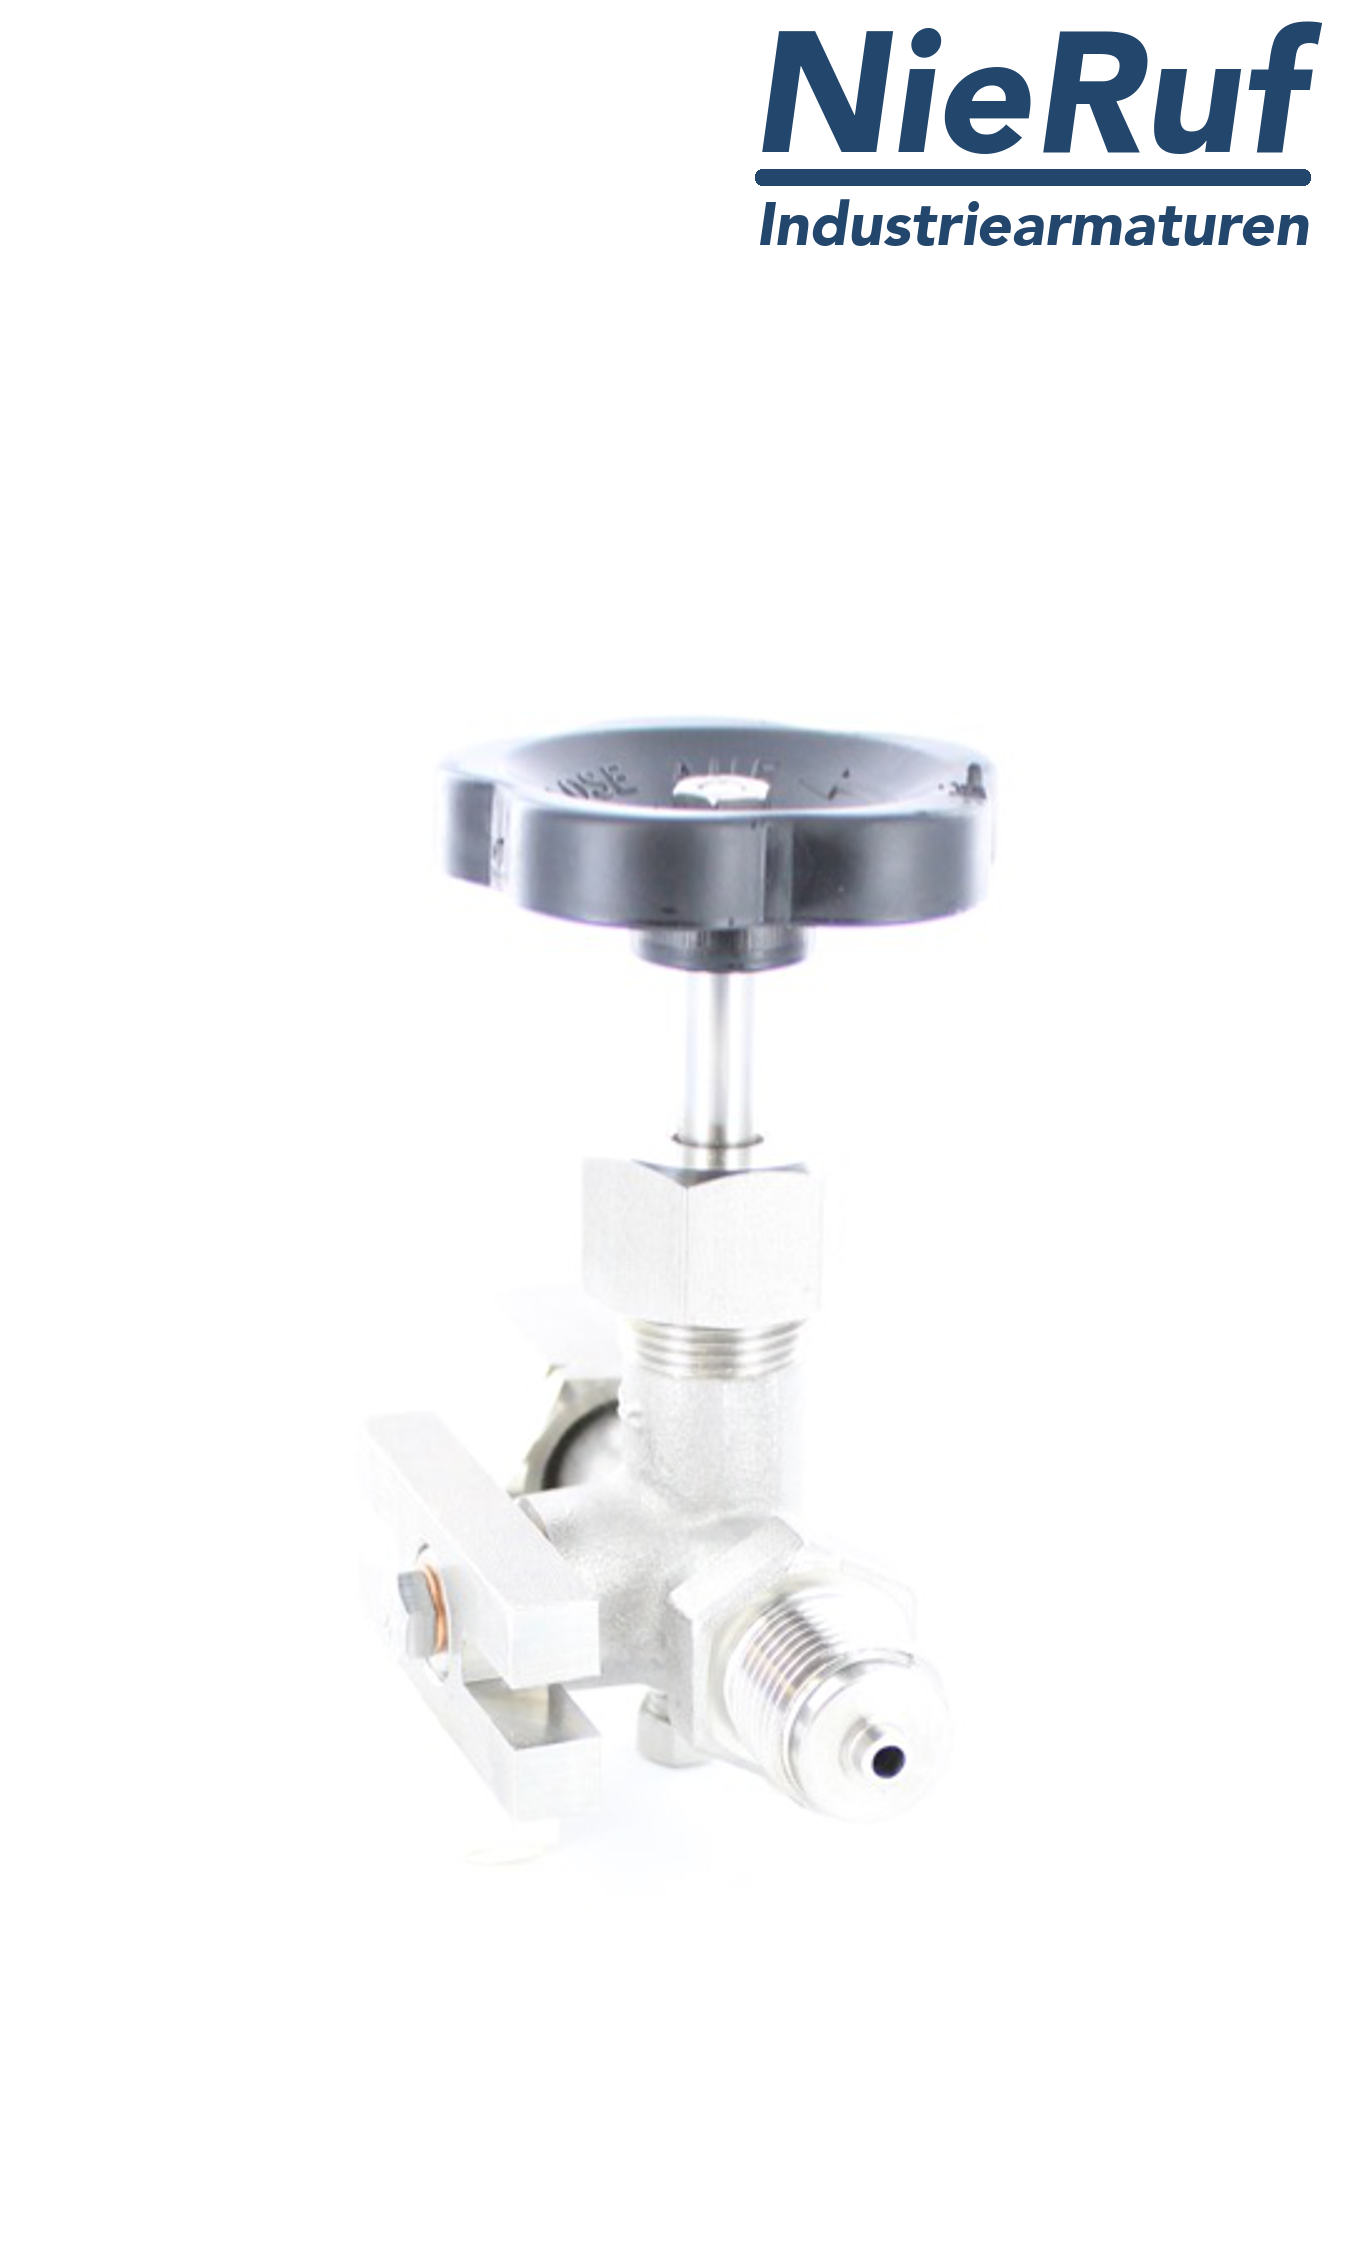 manometer gauge valves male thread x sleeve x test flange 60x25 mm DIN 16271 stainless steel 1.4571 400 bar